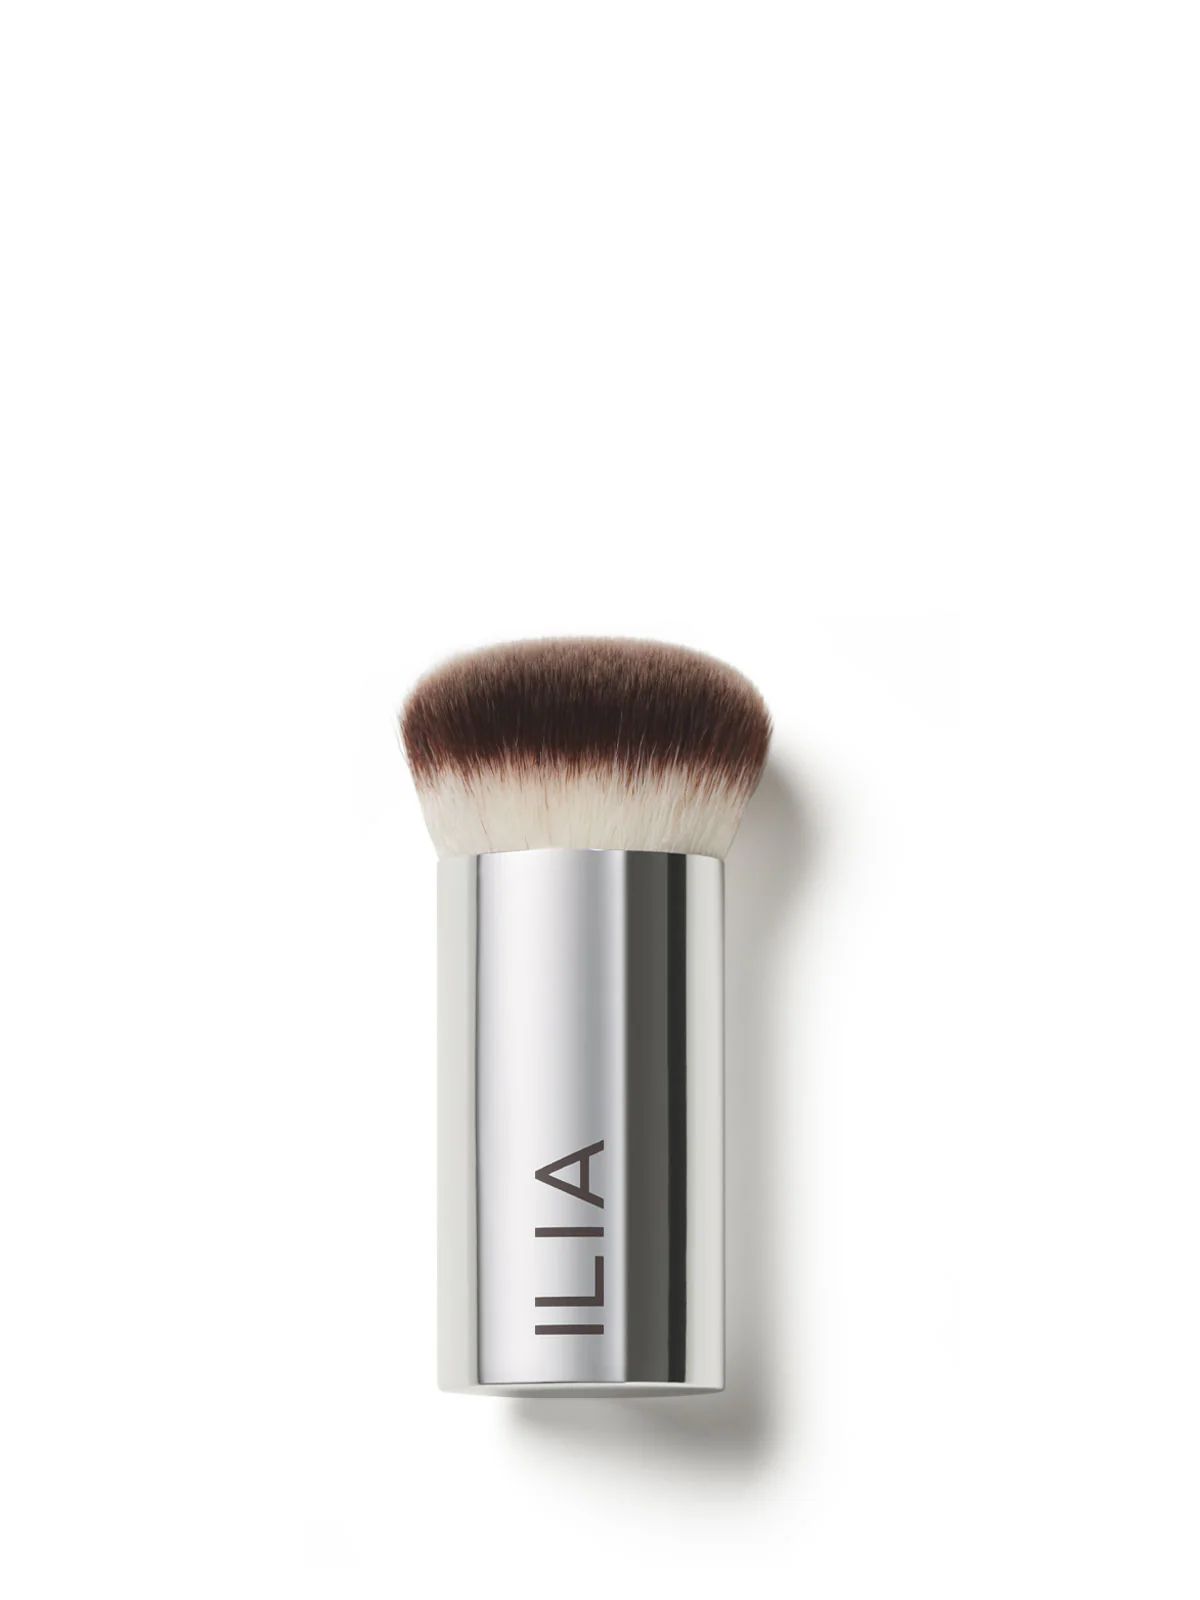 ILIA Brushes - Perfecting Buff Brush - Makeup Brushes | ILIA | ILIA Beauty